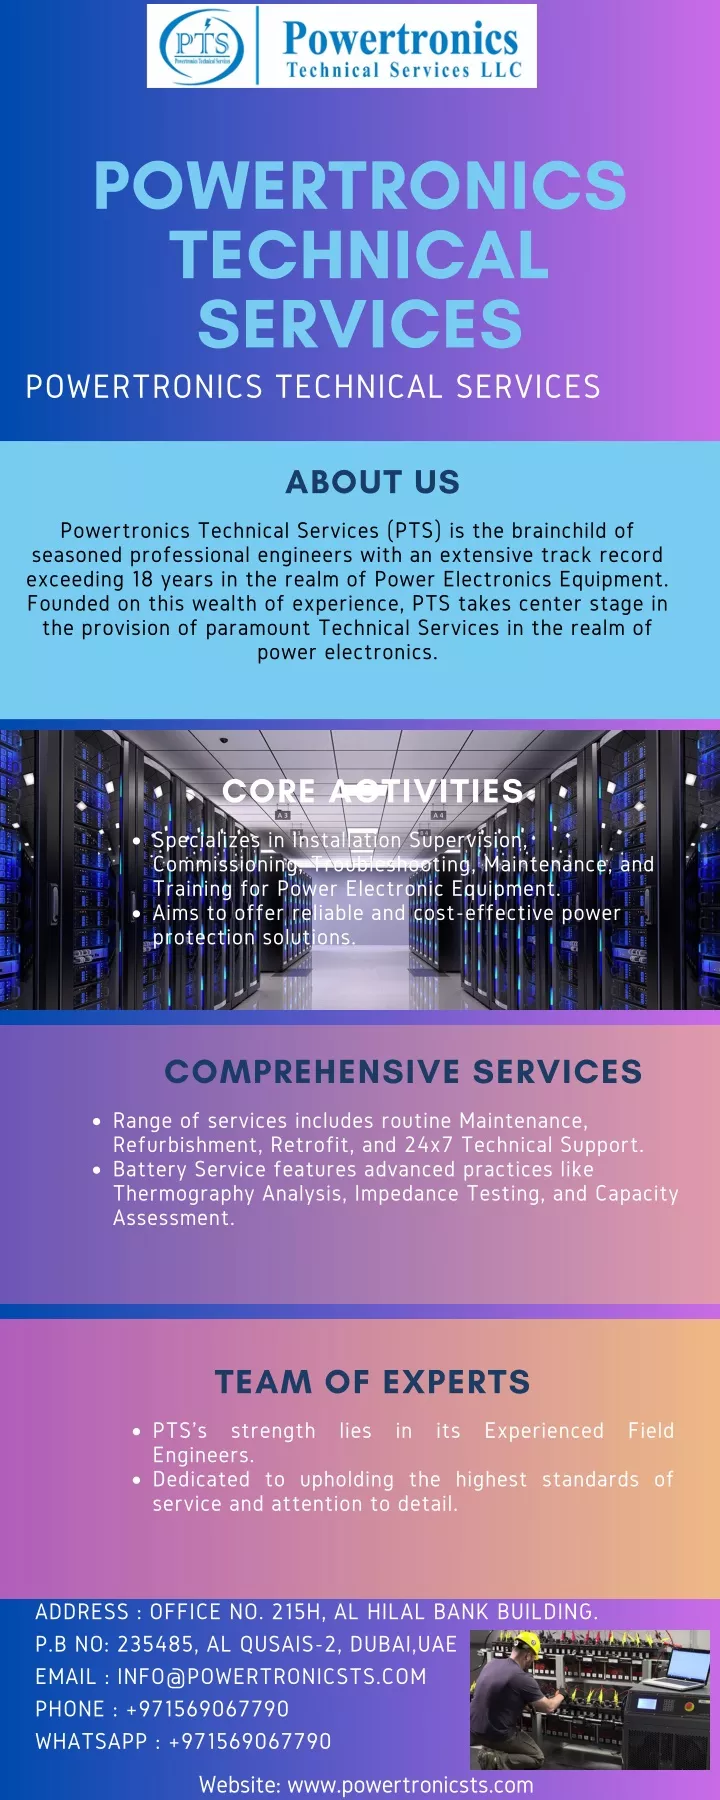 powertronics technical services powertronics